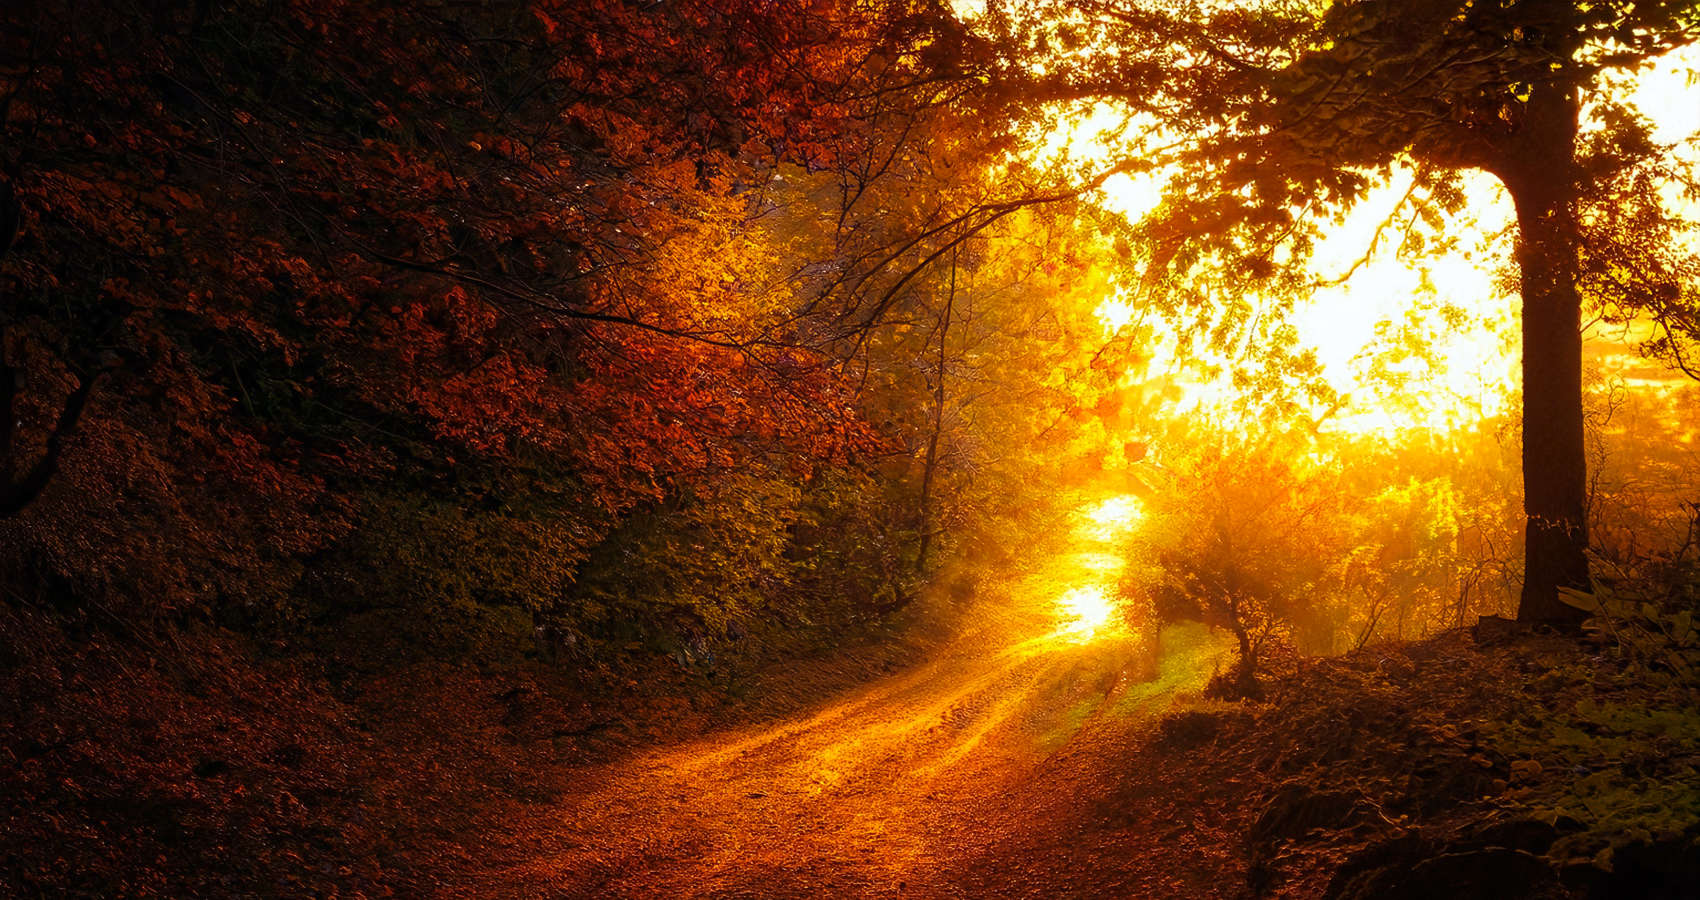 Autumn Morning, a poem by Jeff Flesch at Spillwords.com